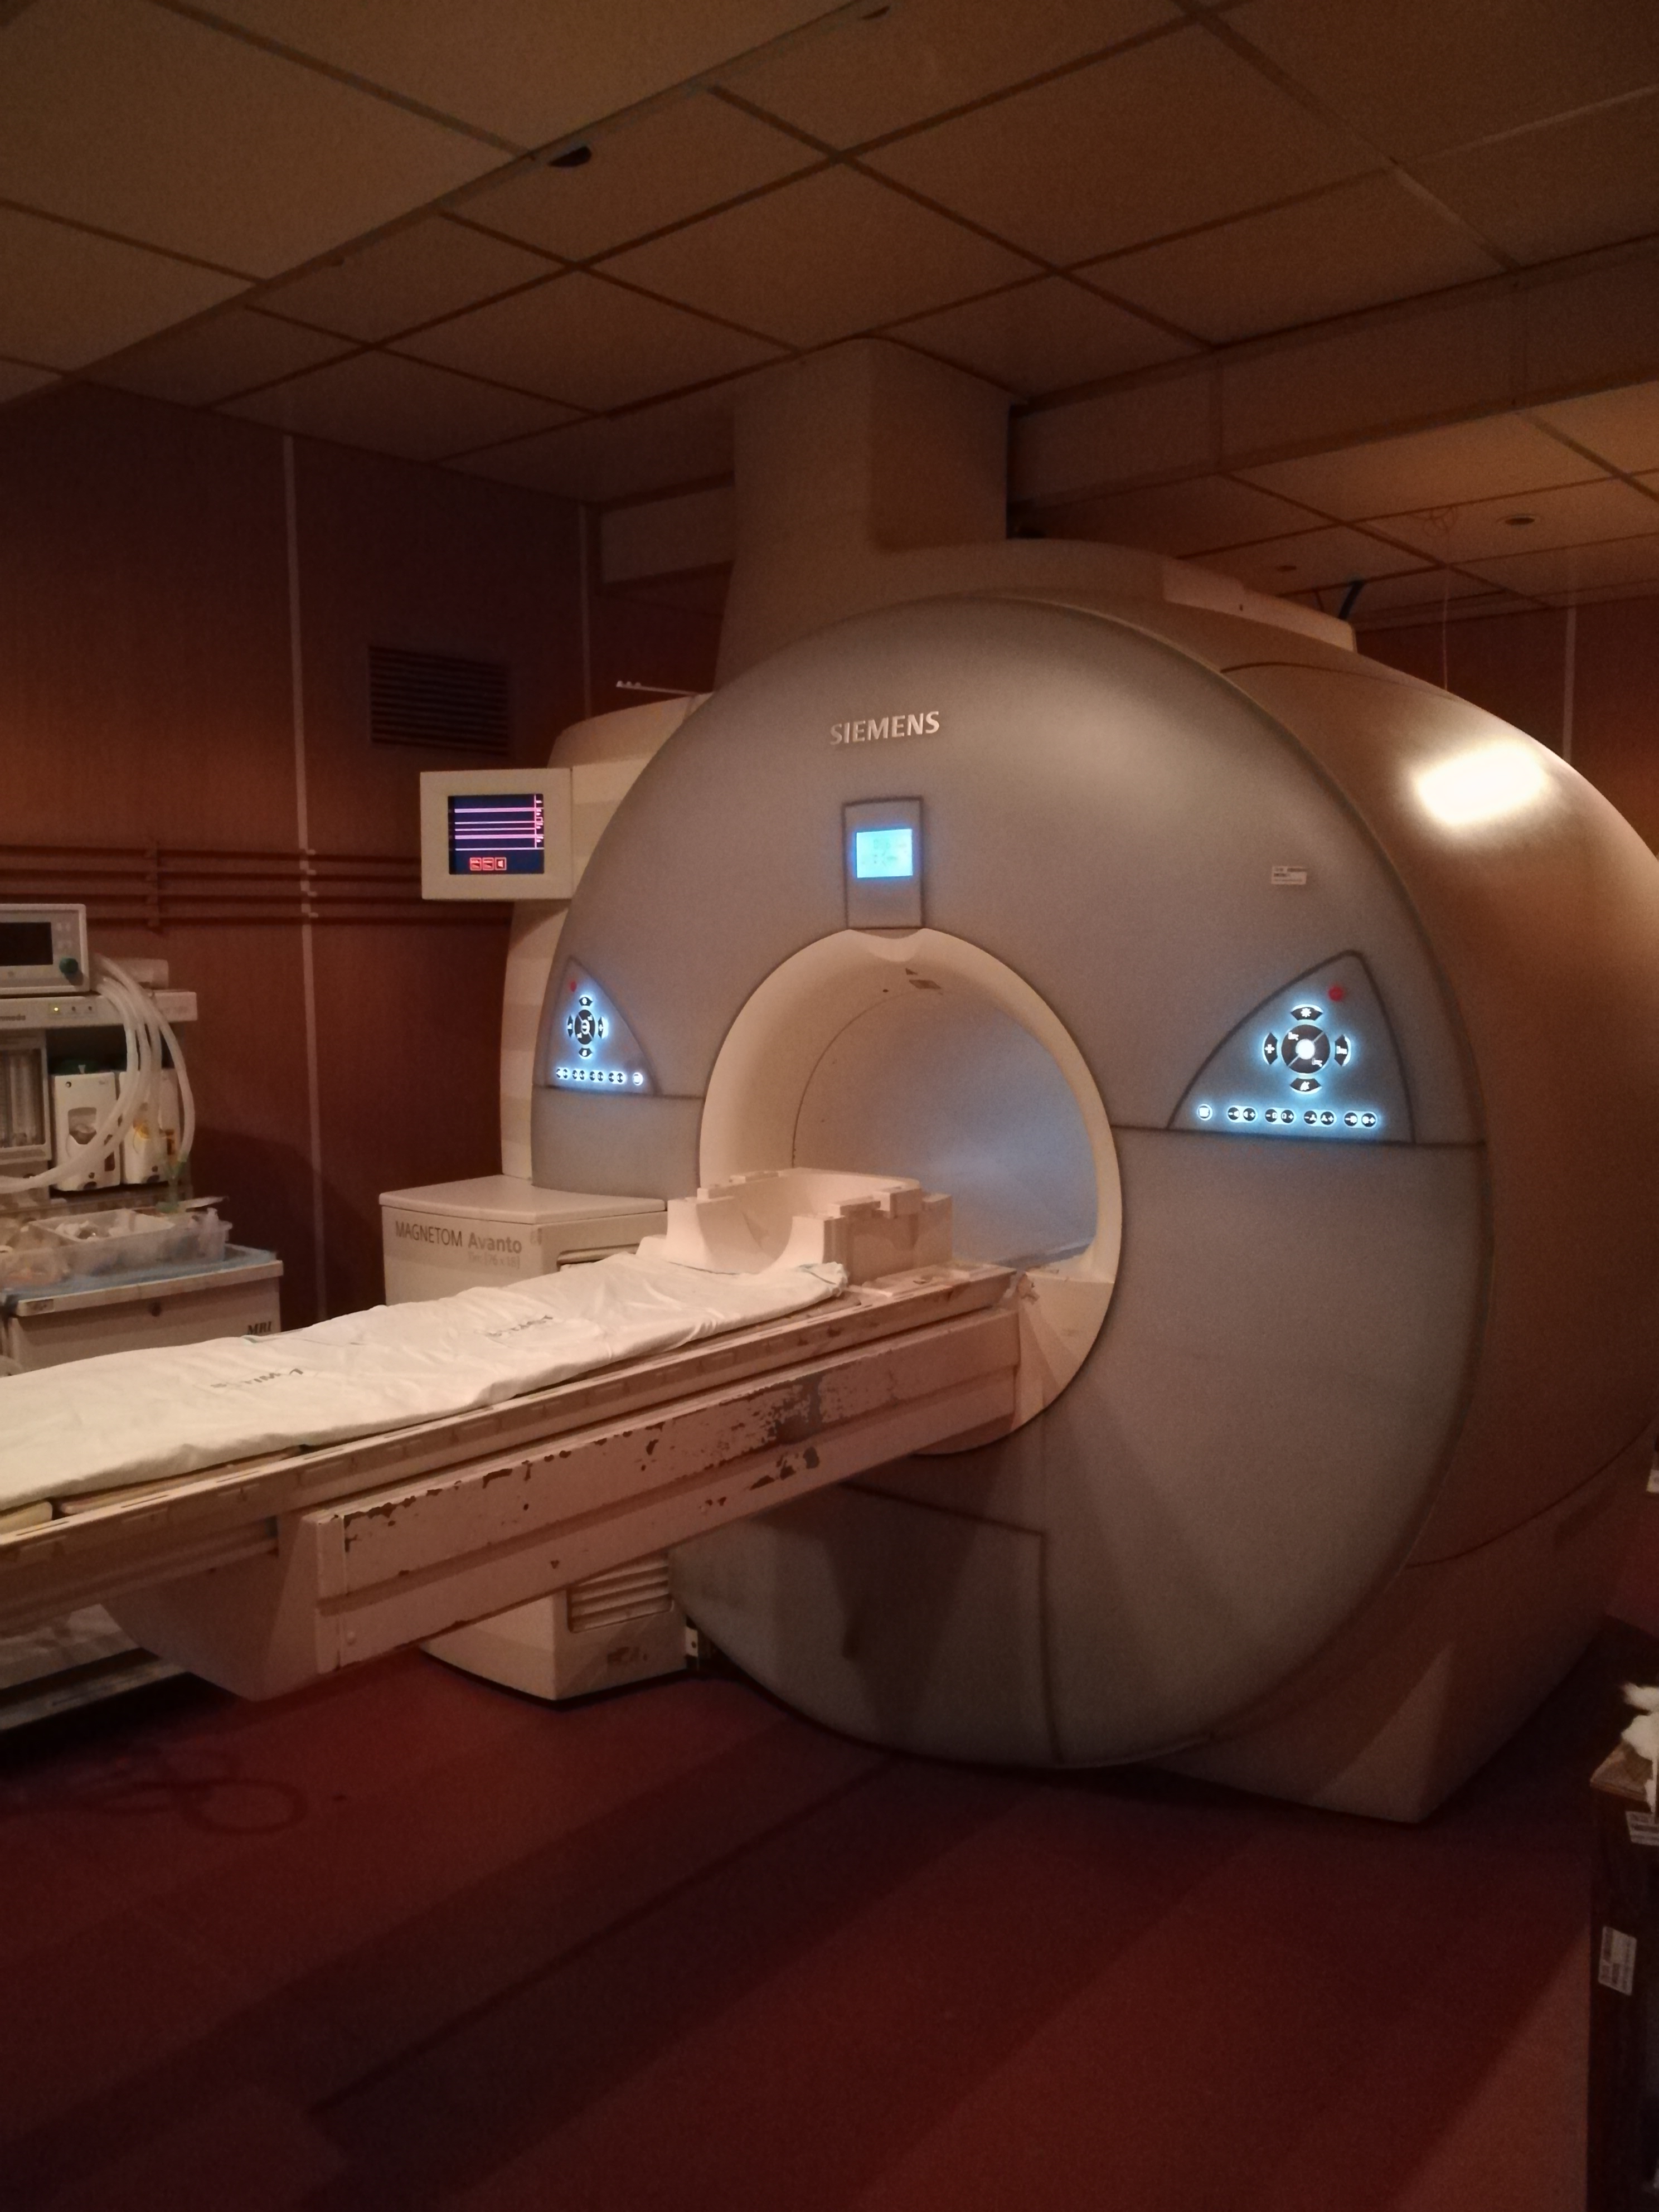 MRI 1.5T